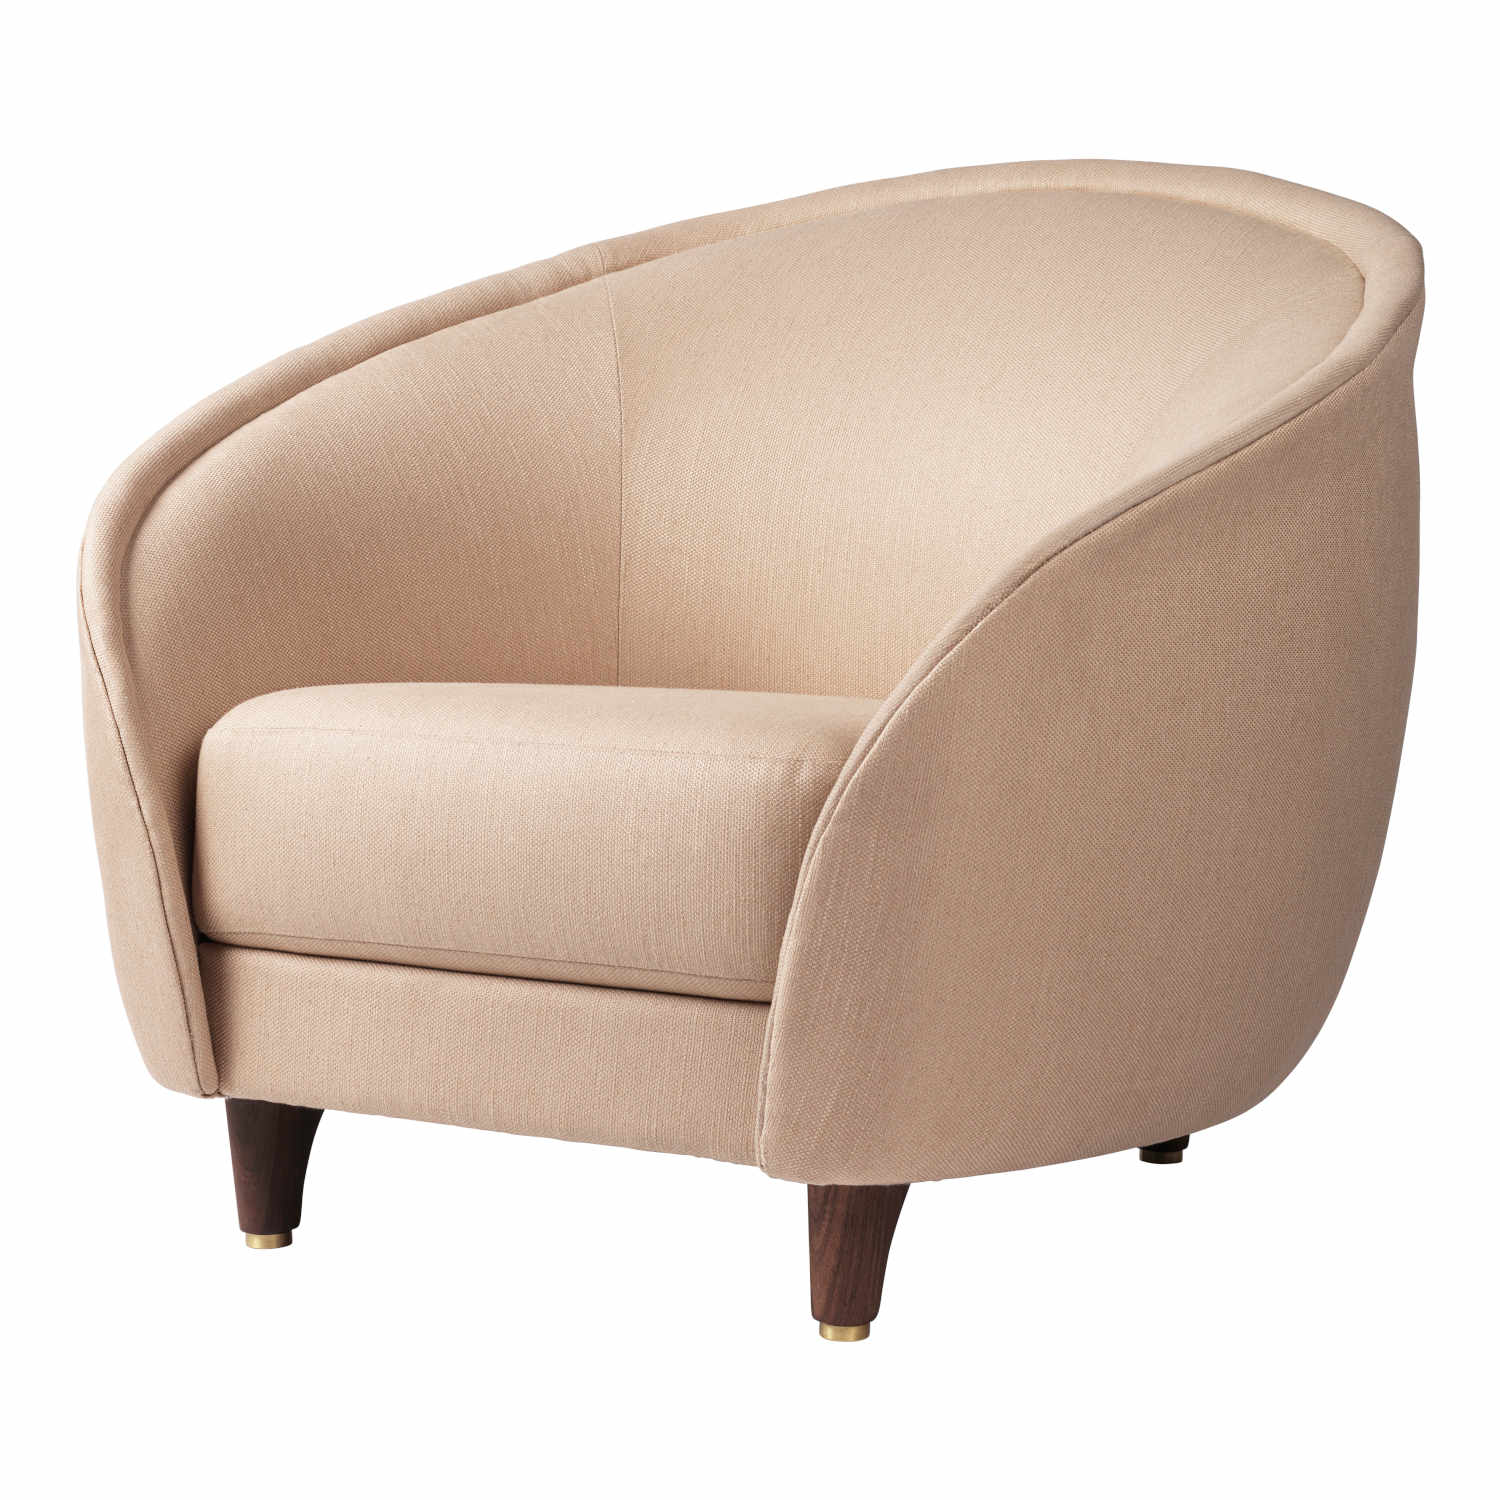 Revers Lounge Chair Sessel, Bezug kvadrat remix 0643 stoff, Untergestell Wood Base smoked oak finish (matt lackiert) von GUBI